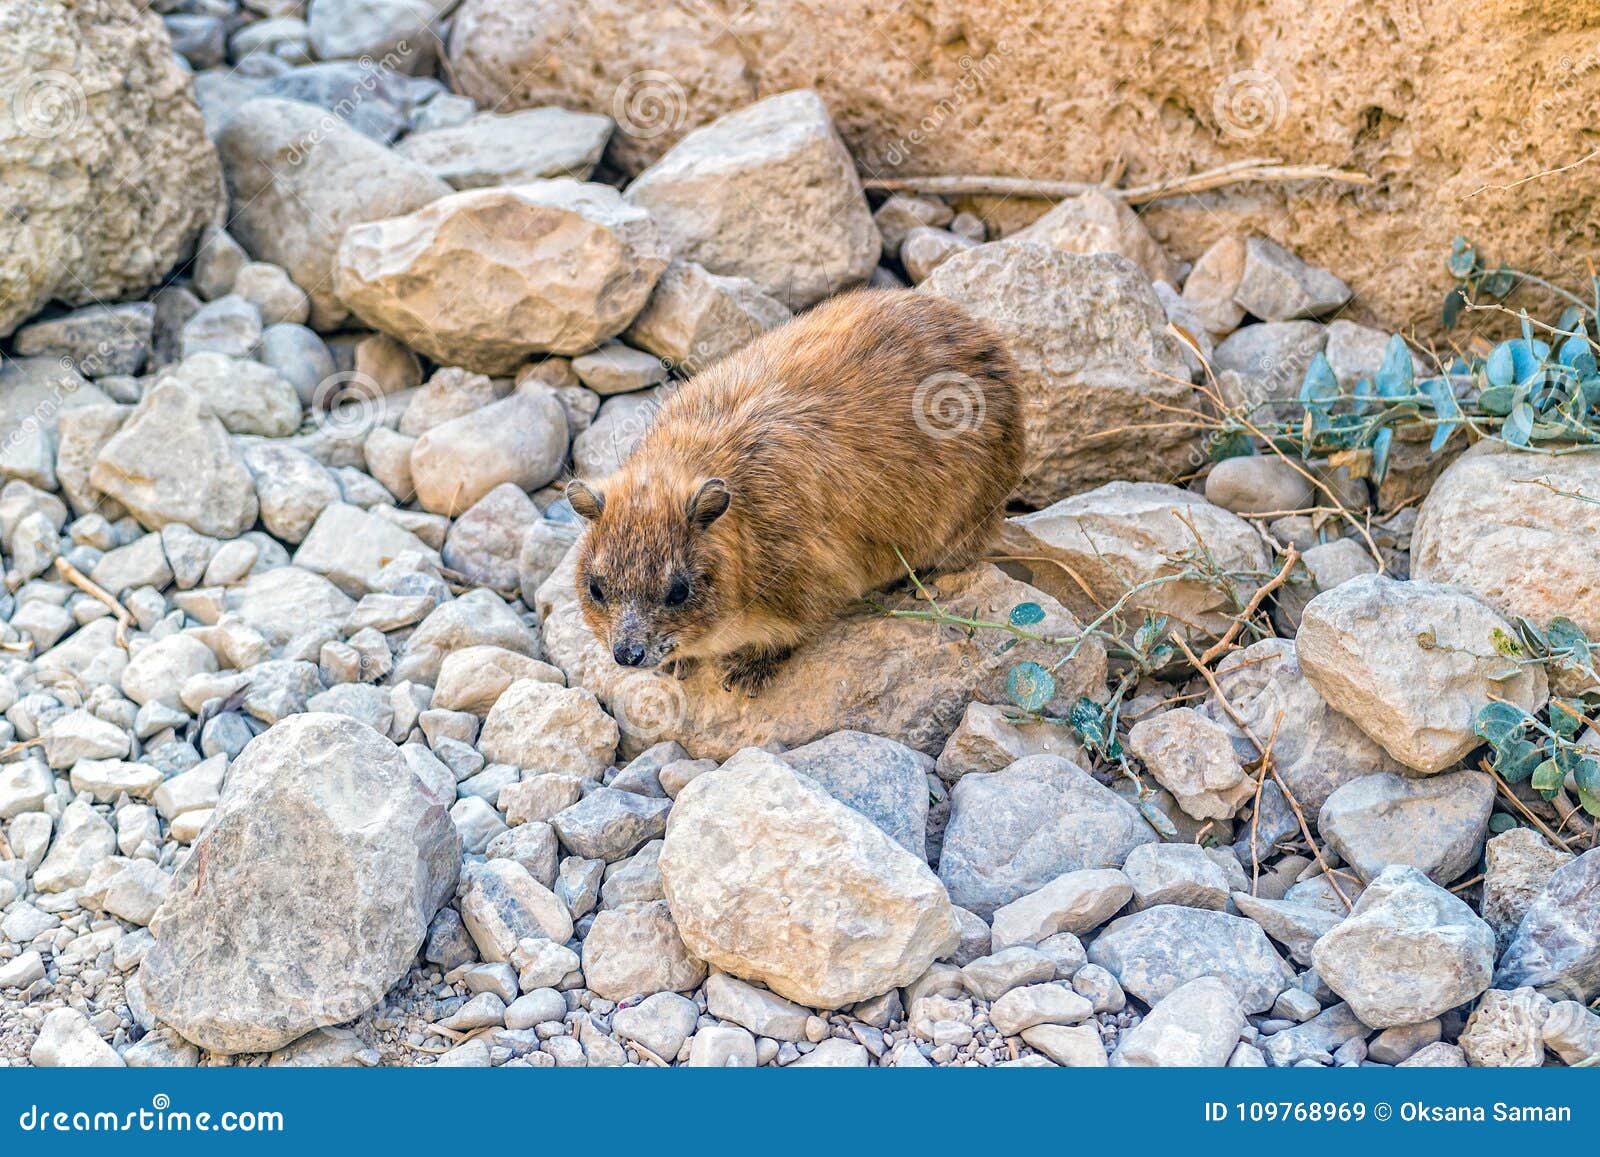 rock hyrax, procavia capensis.